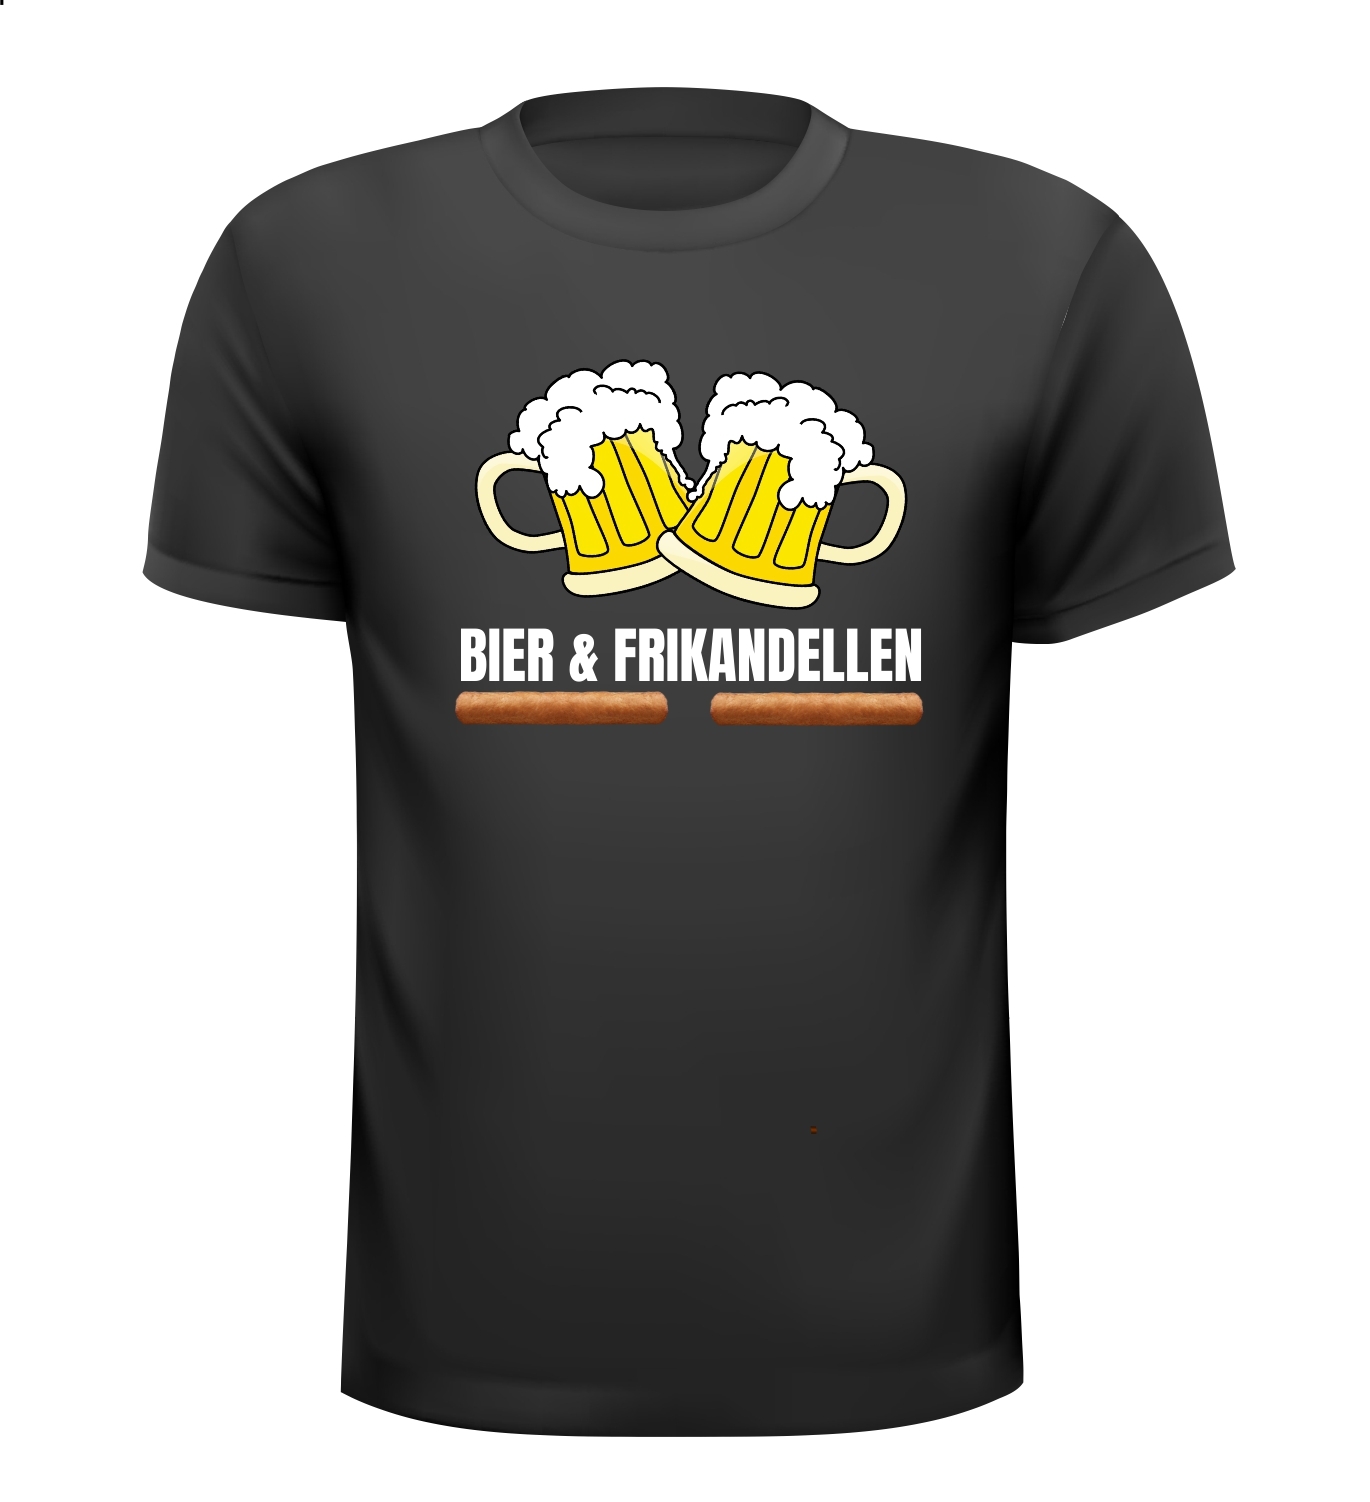 Bier en Frikandellen T-shirt